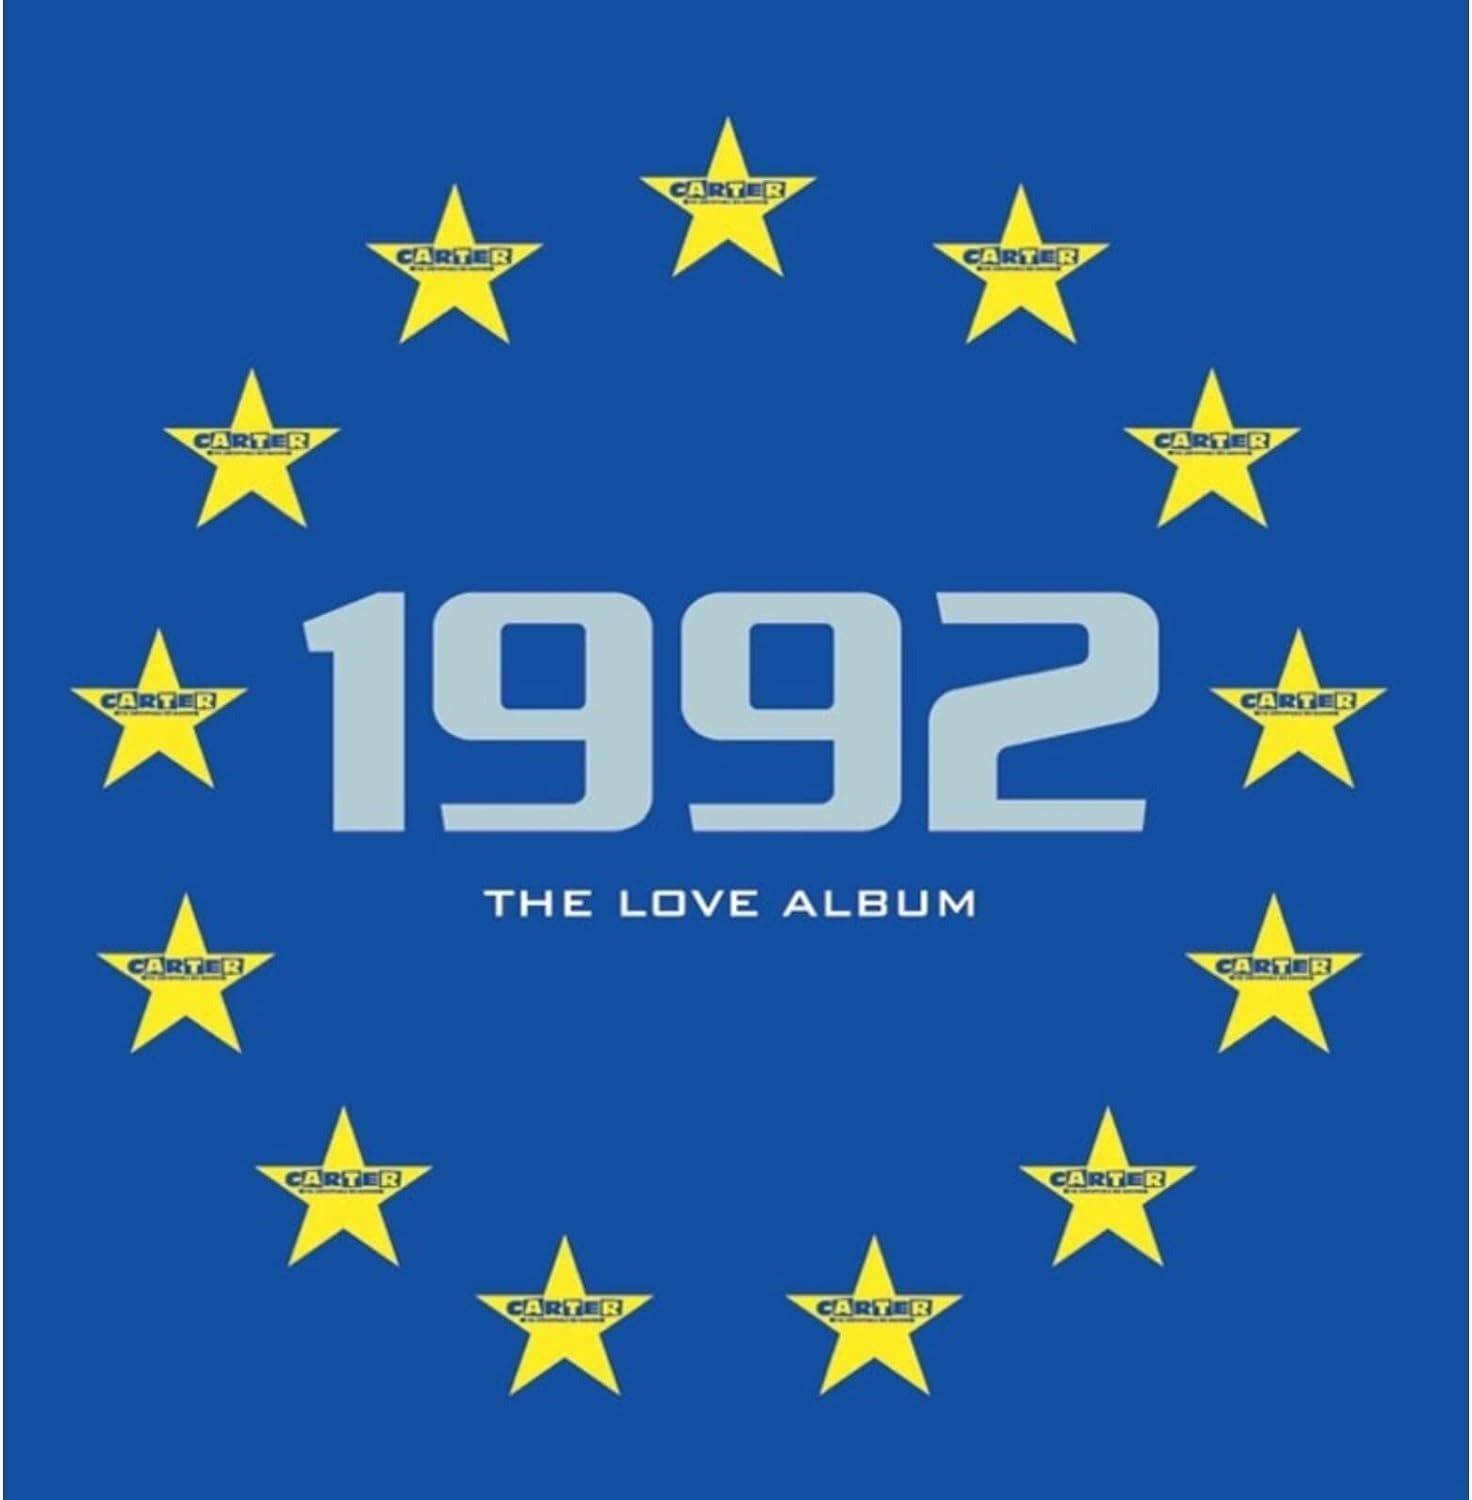 CD Shop - CARTER THE UNSTOPPABLE SE 1992: THE LOVE ALBUM